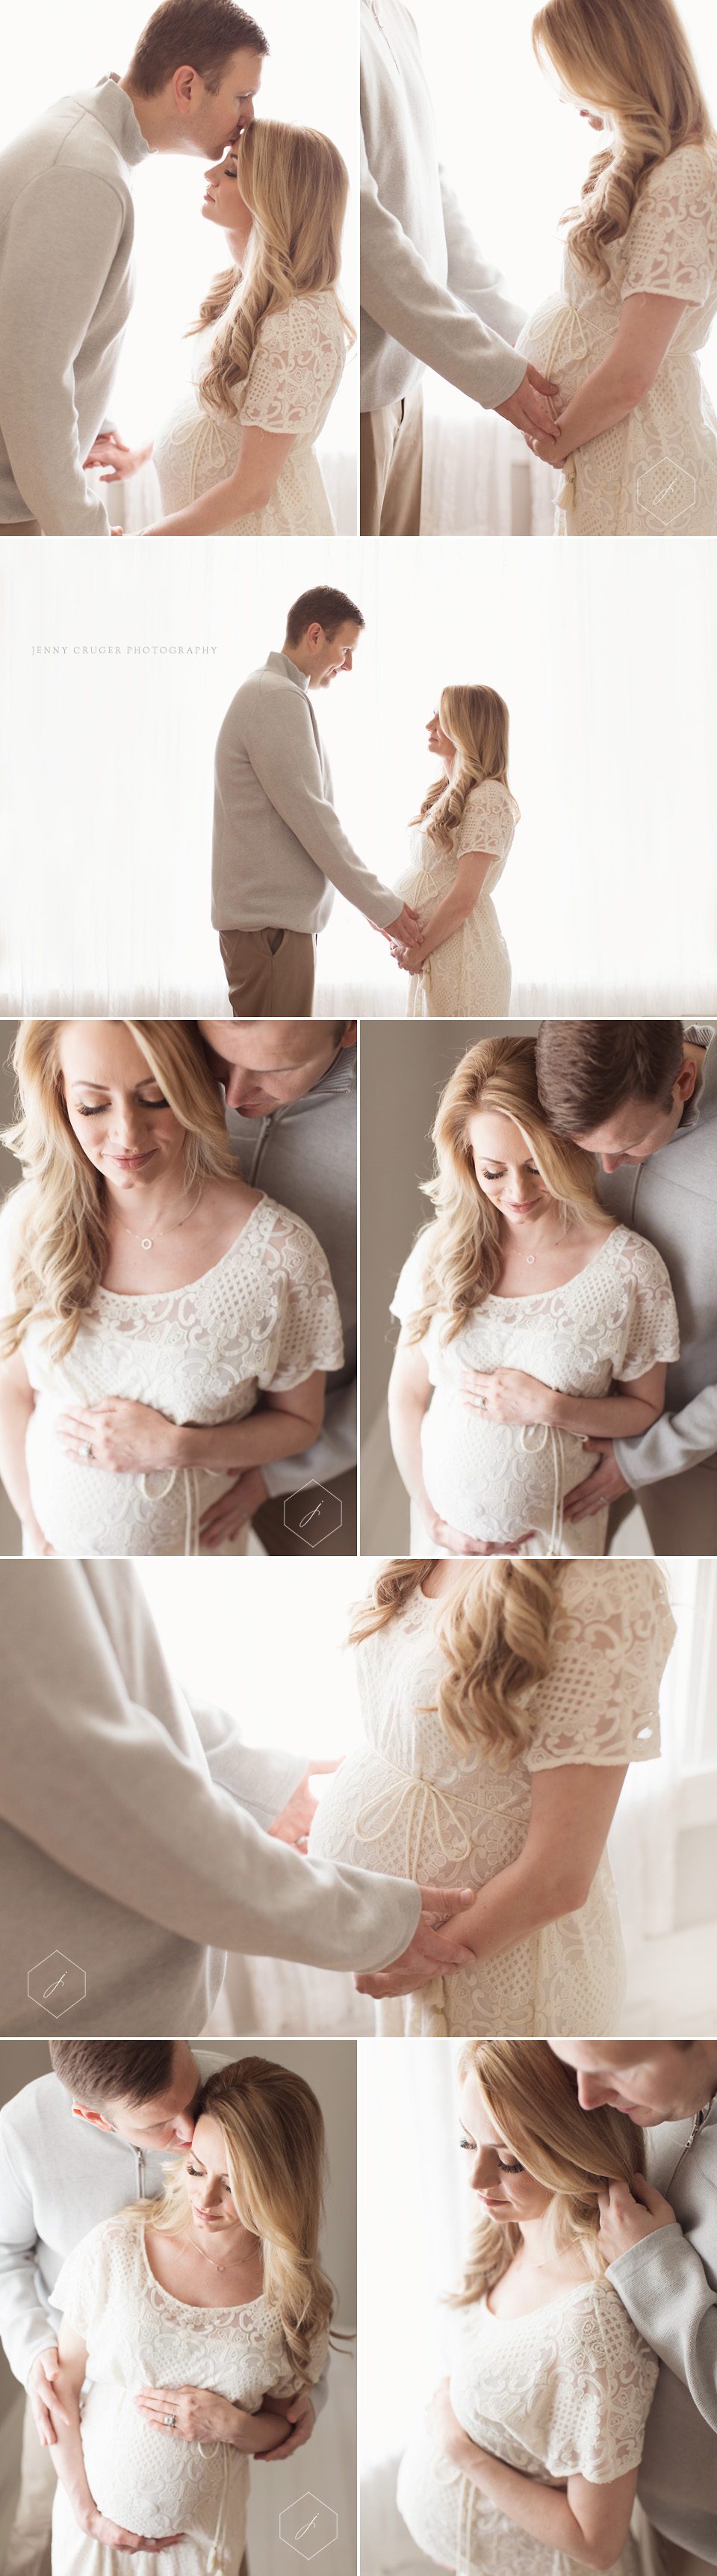 maternity photography nashville couples natural light